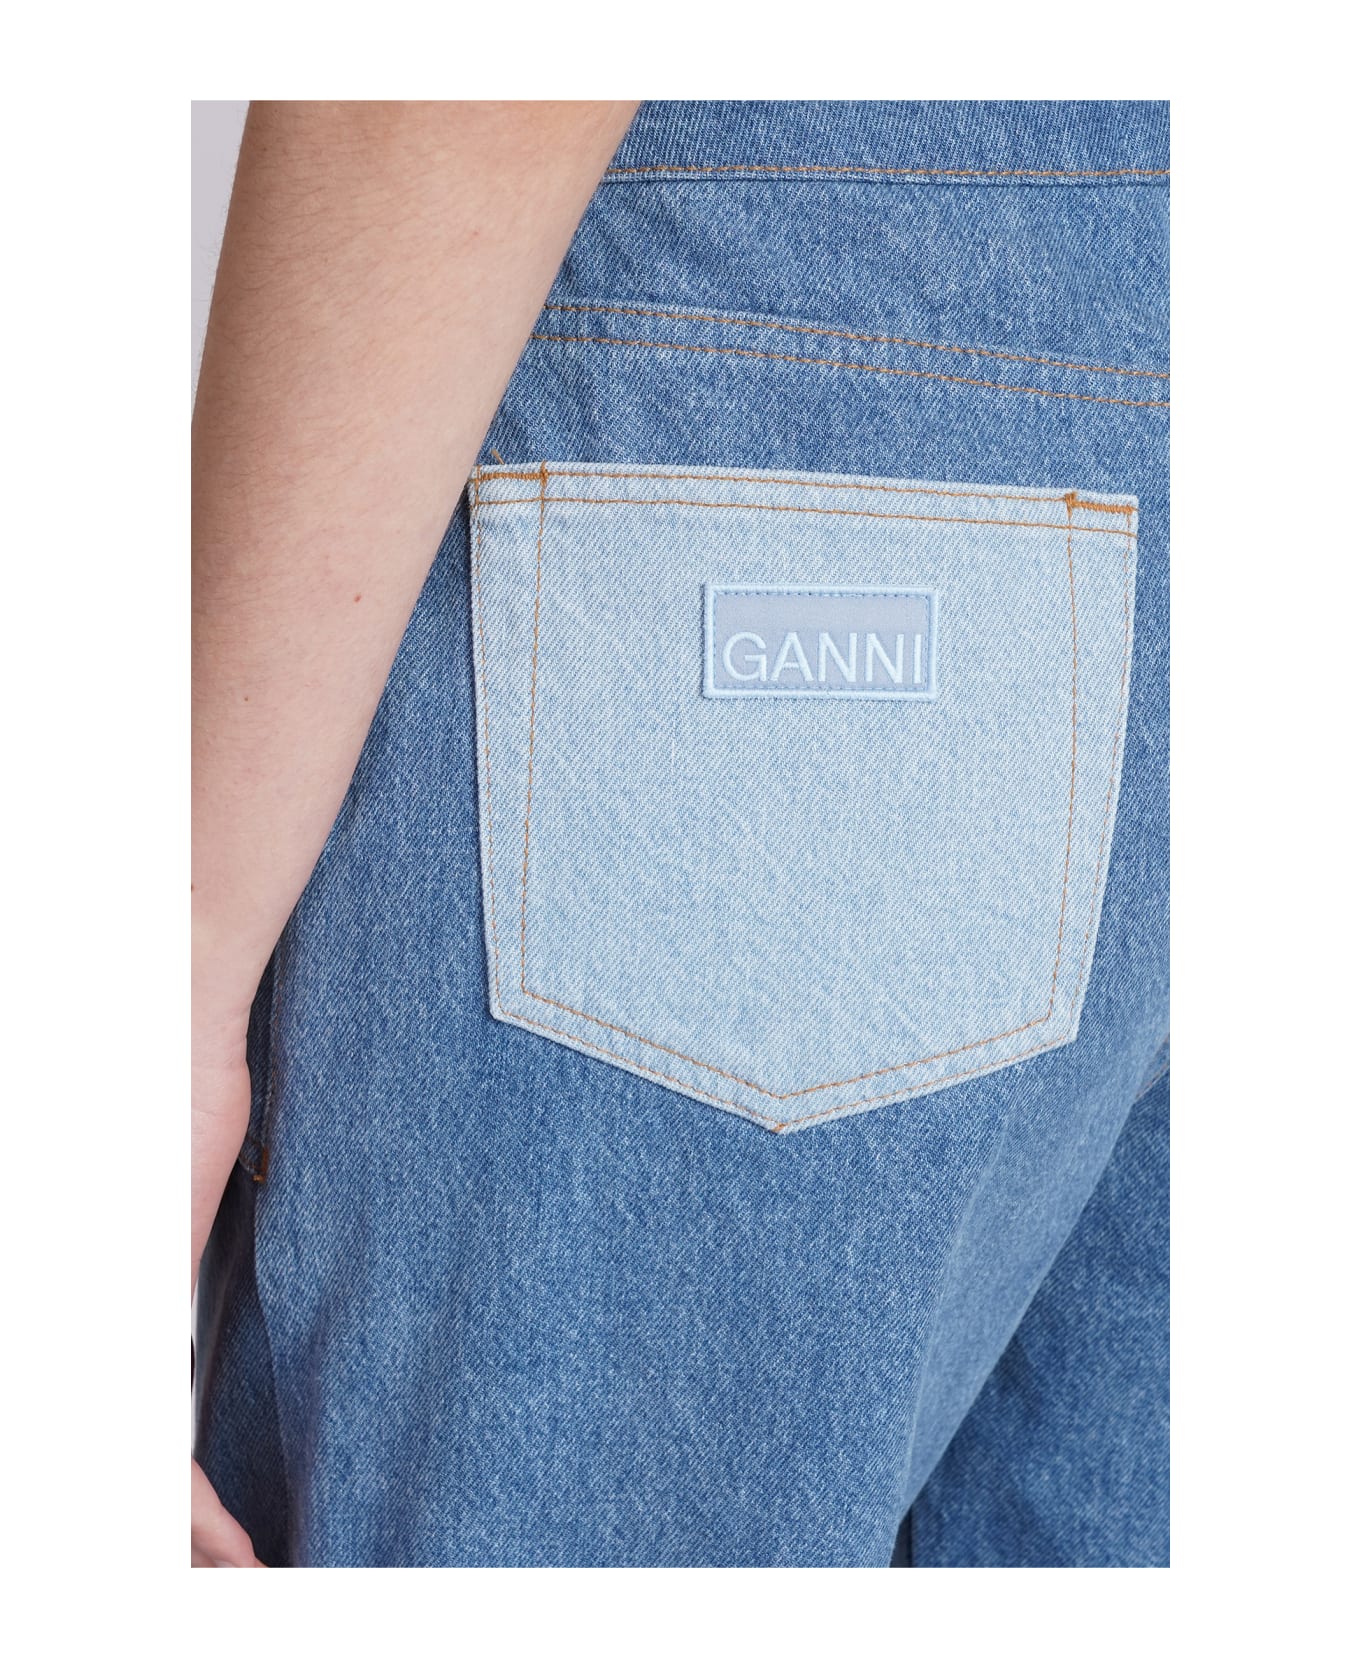 Ganni Jeans In Blue Cotton - BLUE デニム